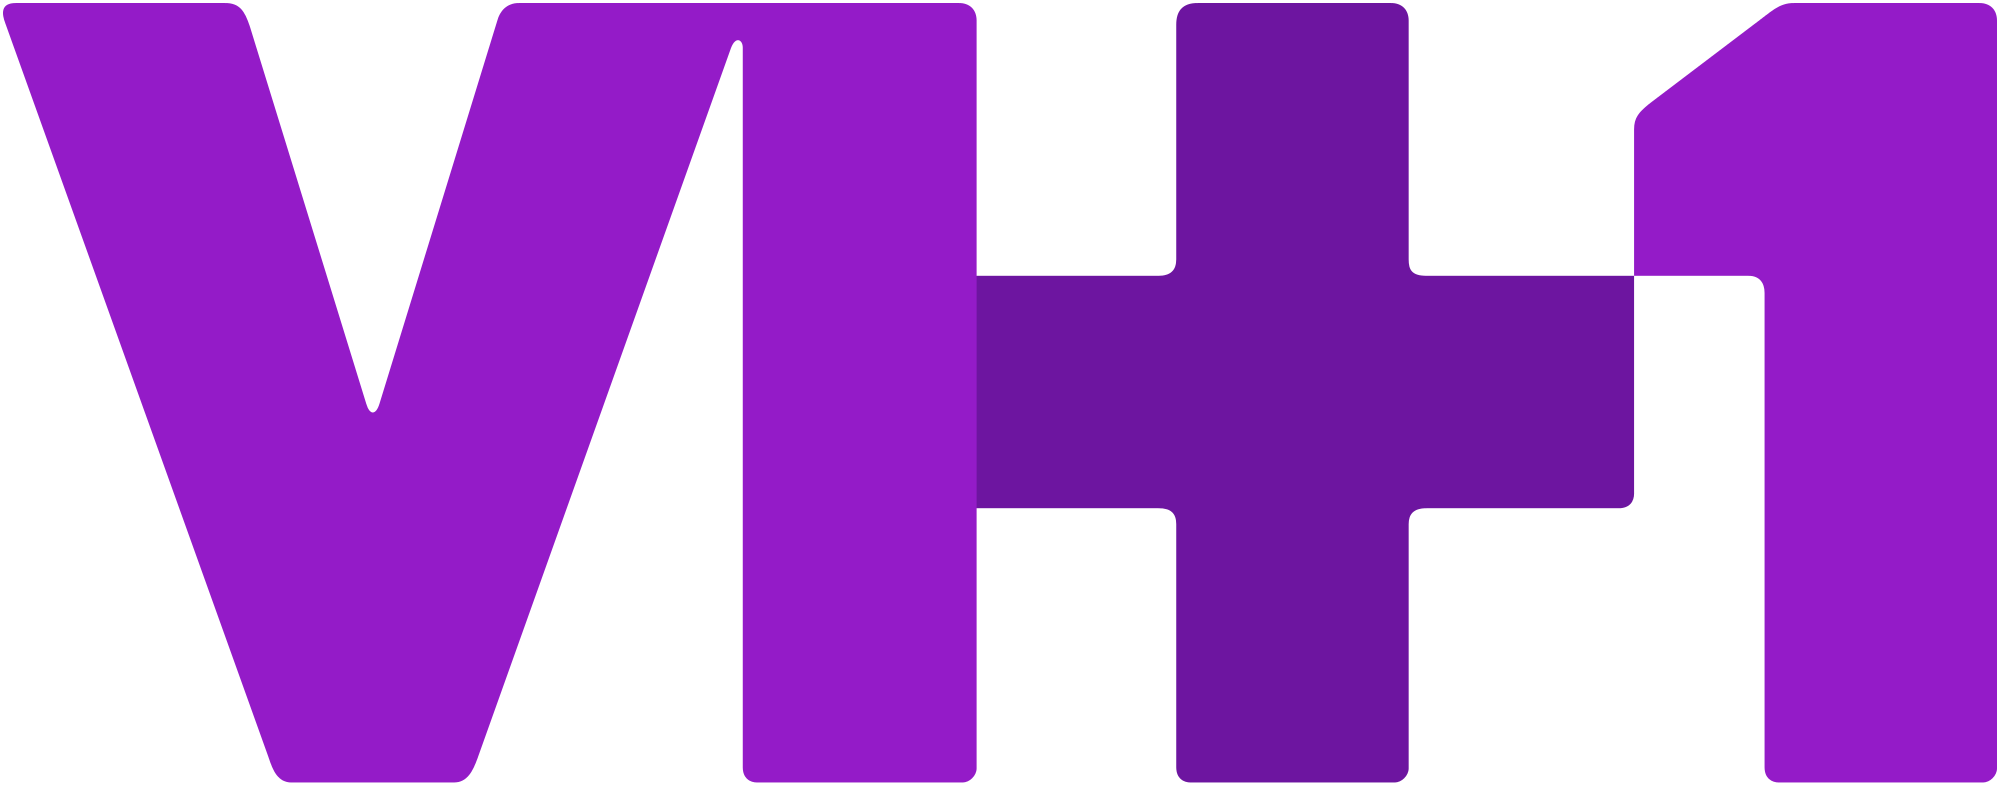 VH-1